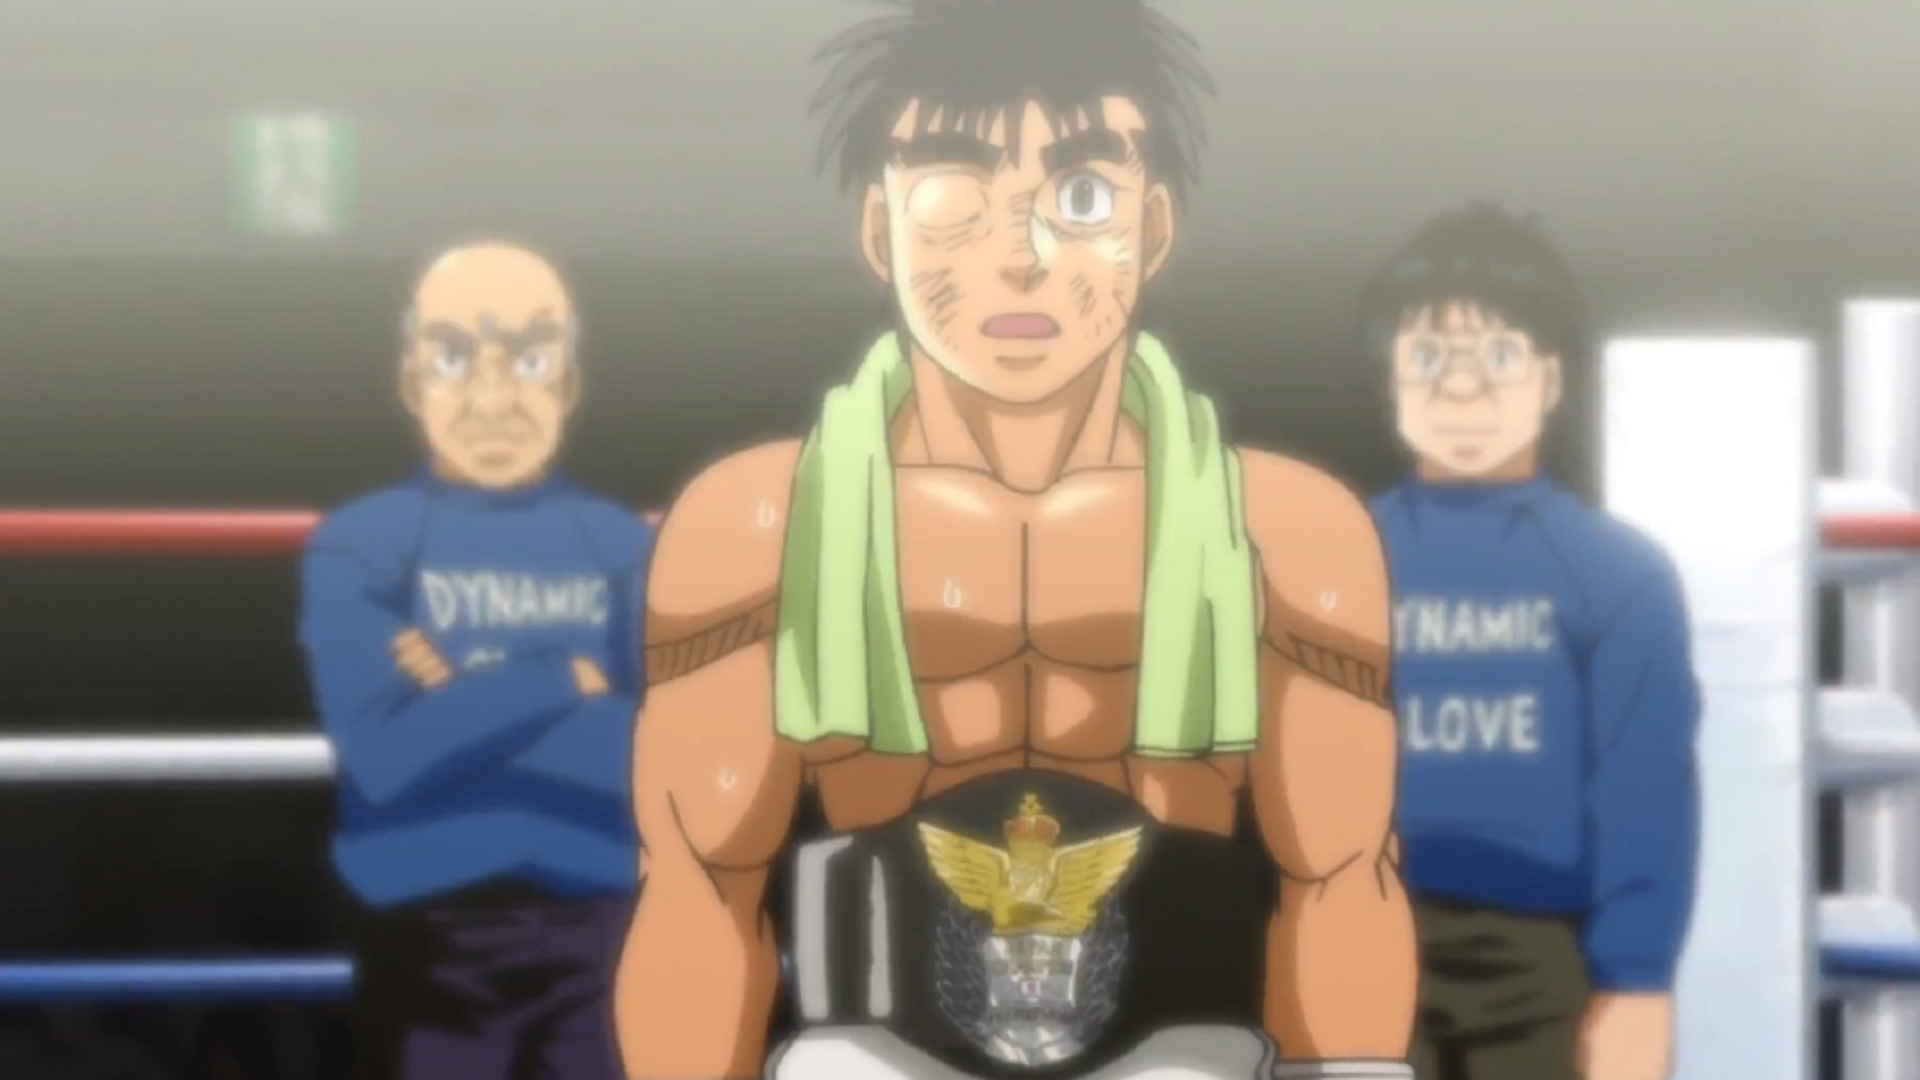 The Legendary Old Boxer Genji The Iron Fist Kamogawa